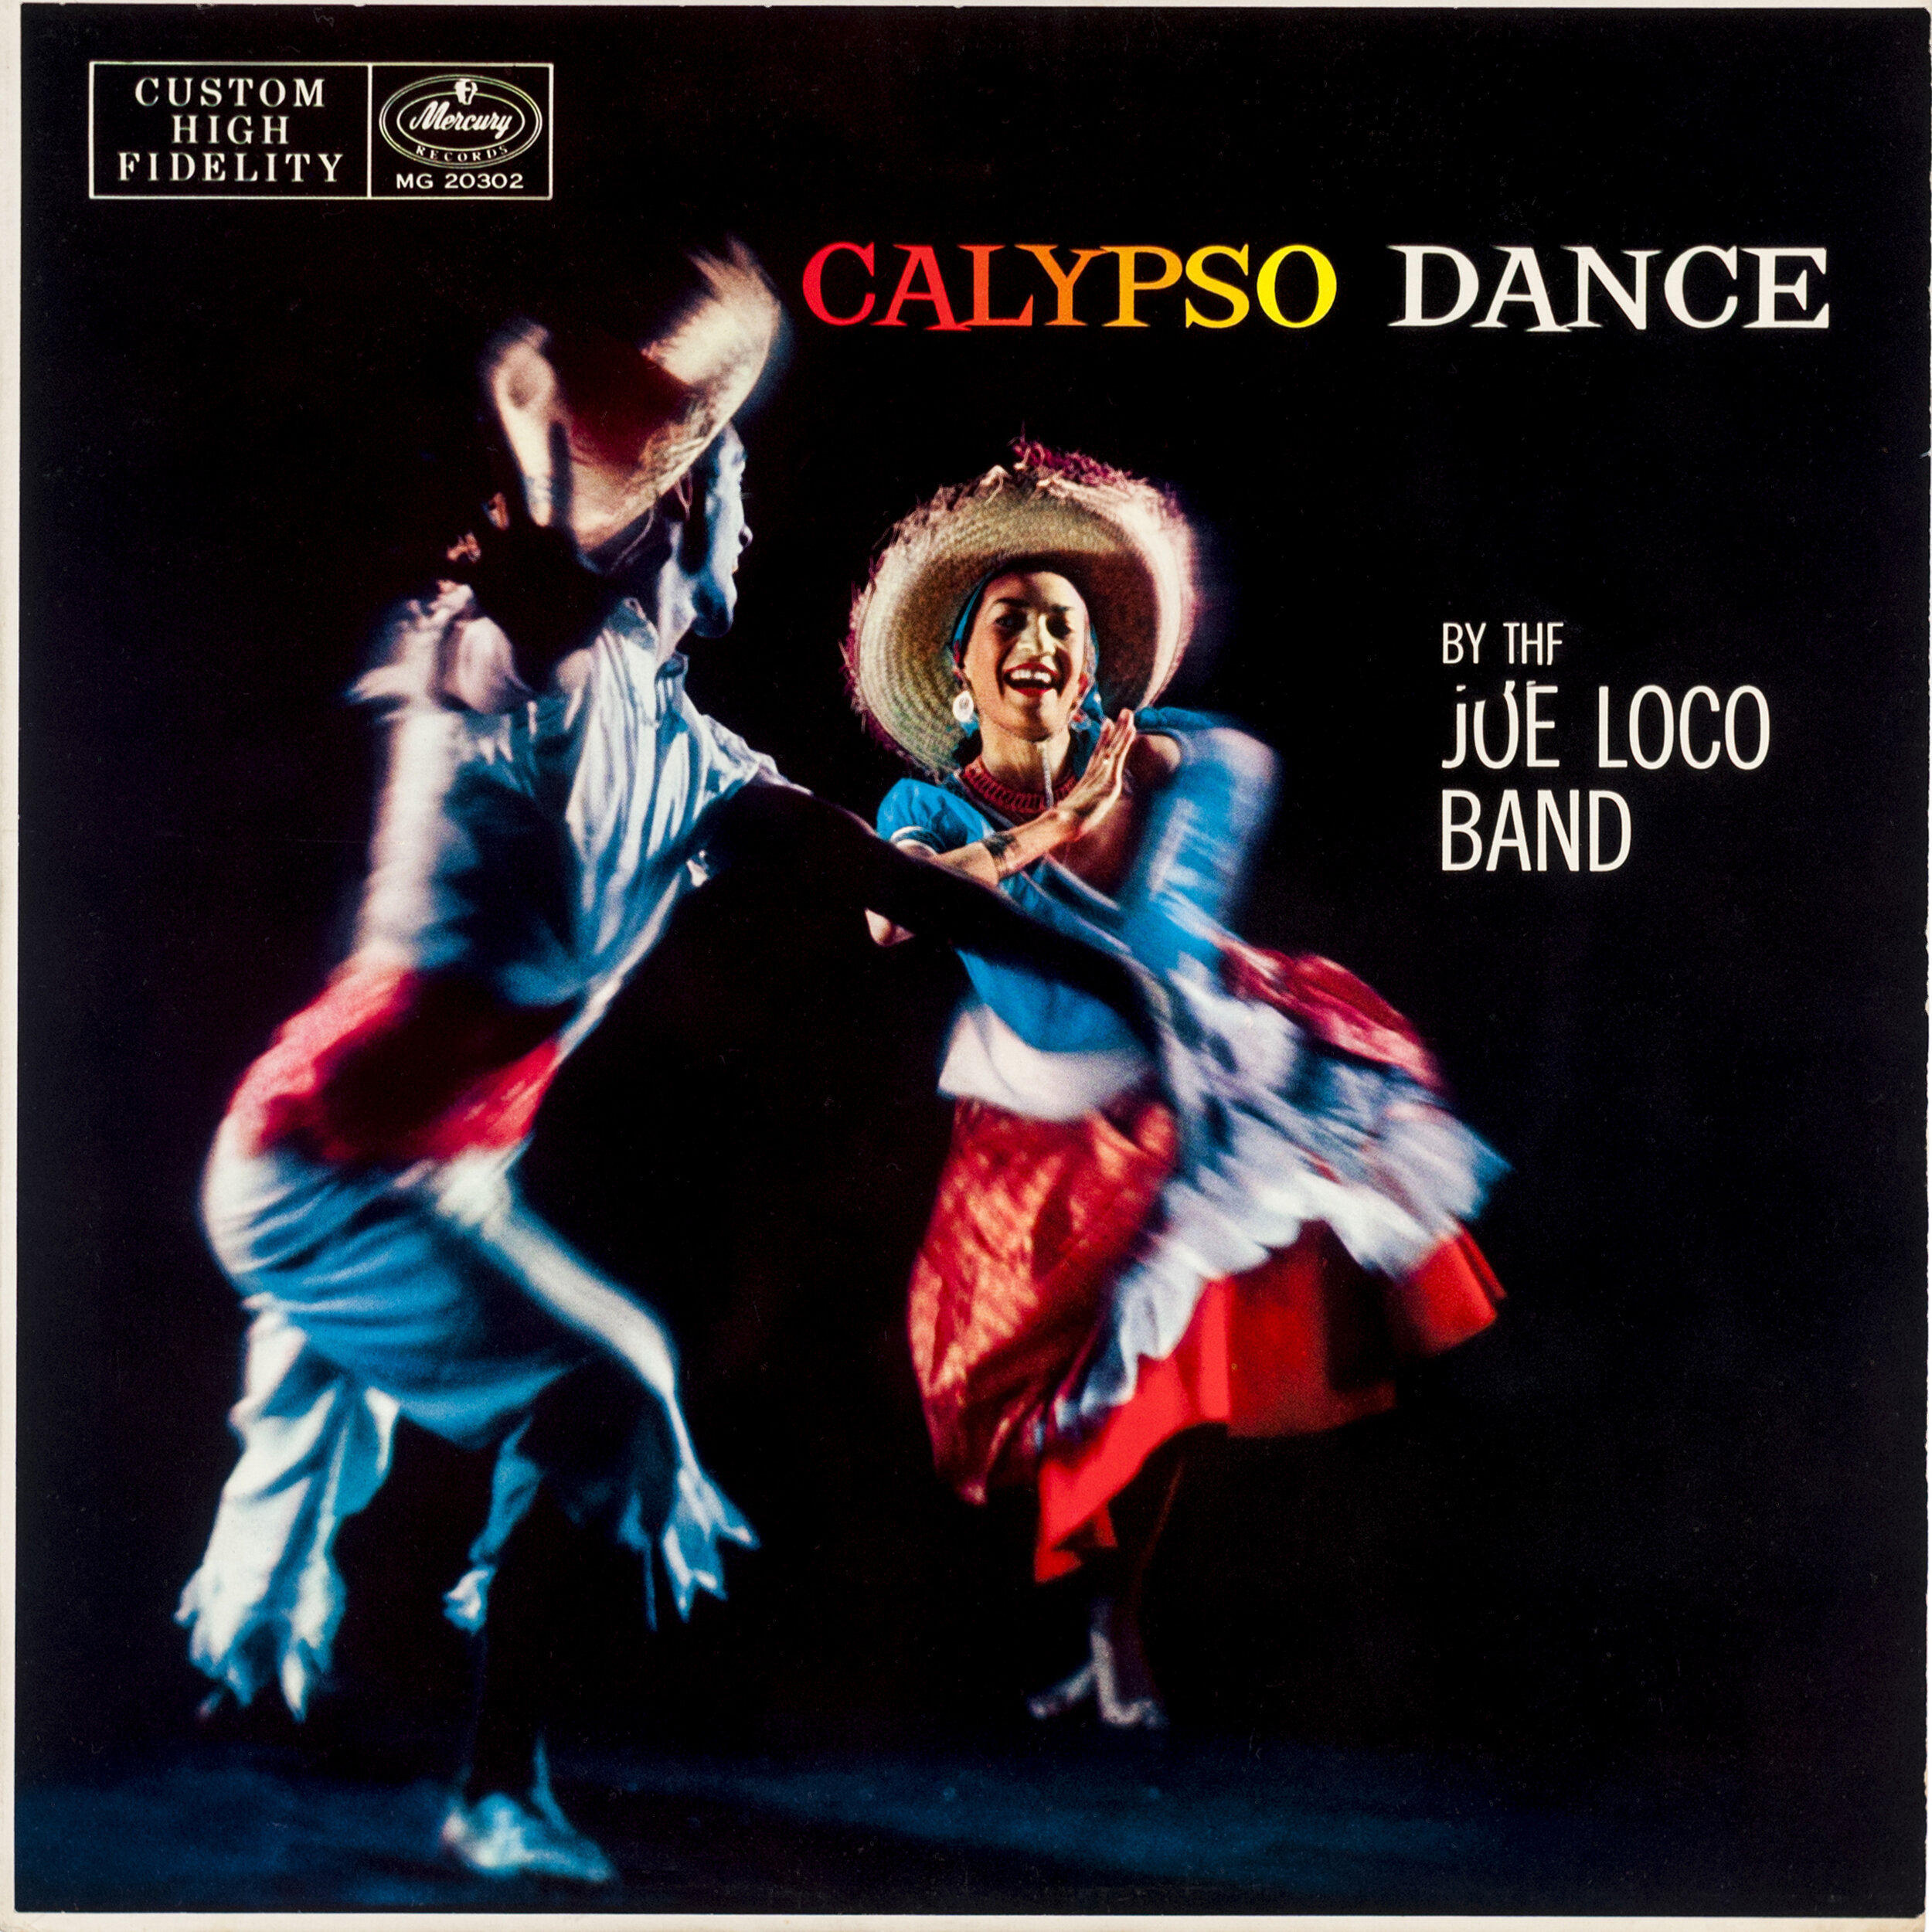 Calypso Dance by the Jue Loco Band Album Cover